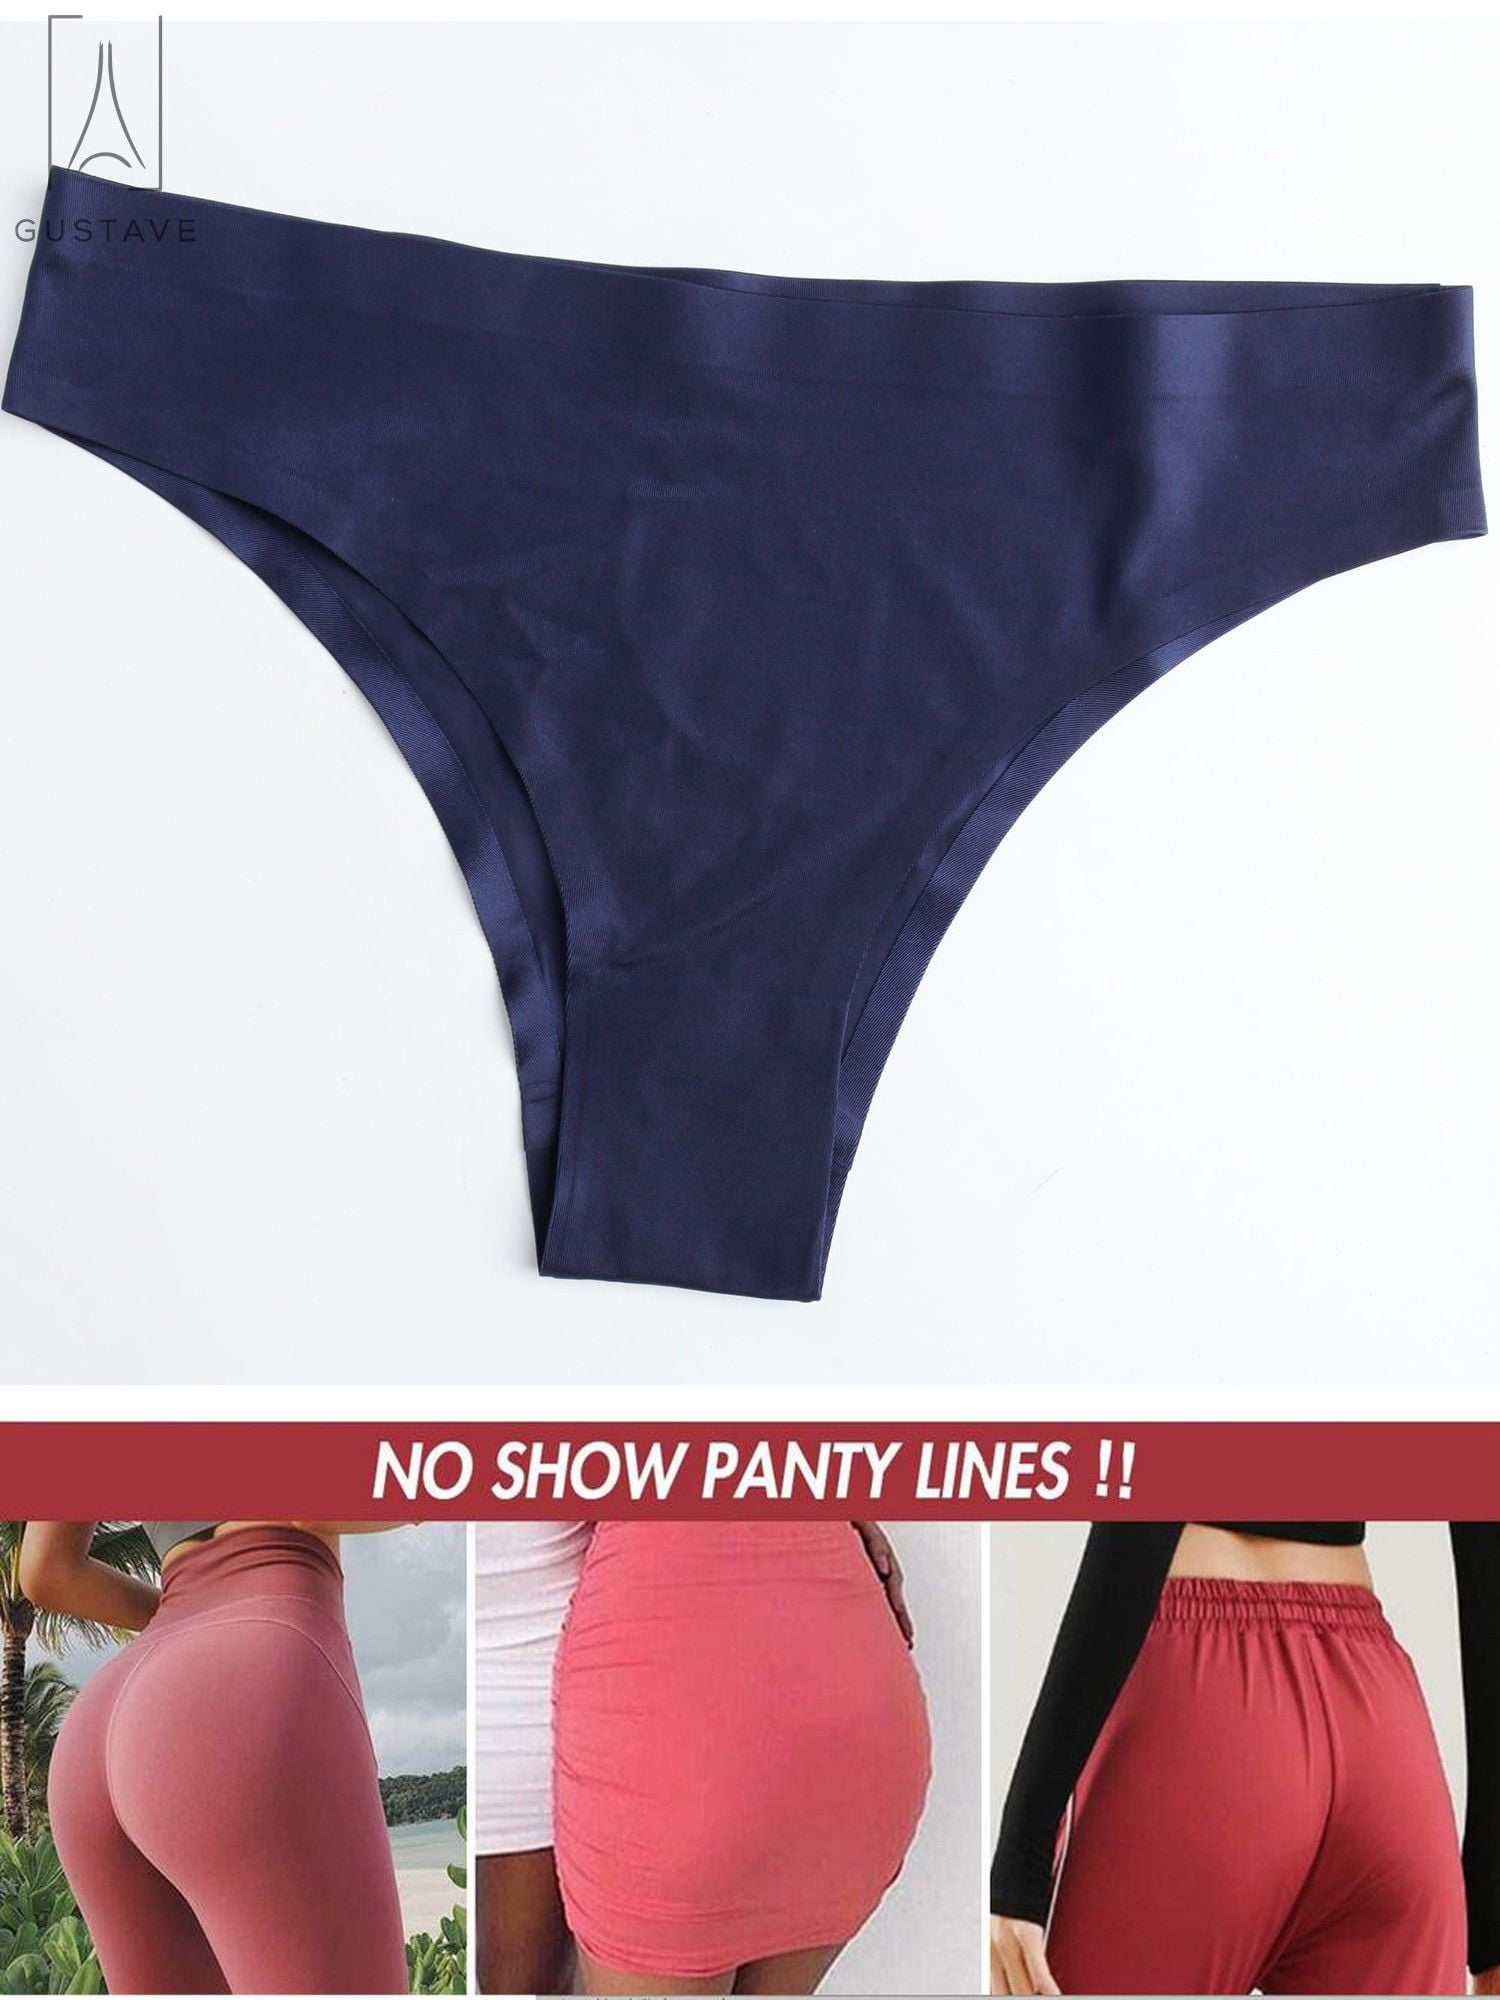 3pcs/set Seamless Underwear Silk Women's Solid Color Panties Lady